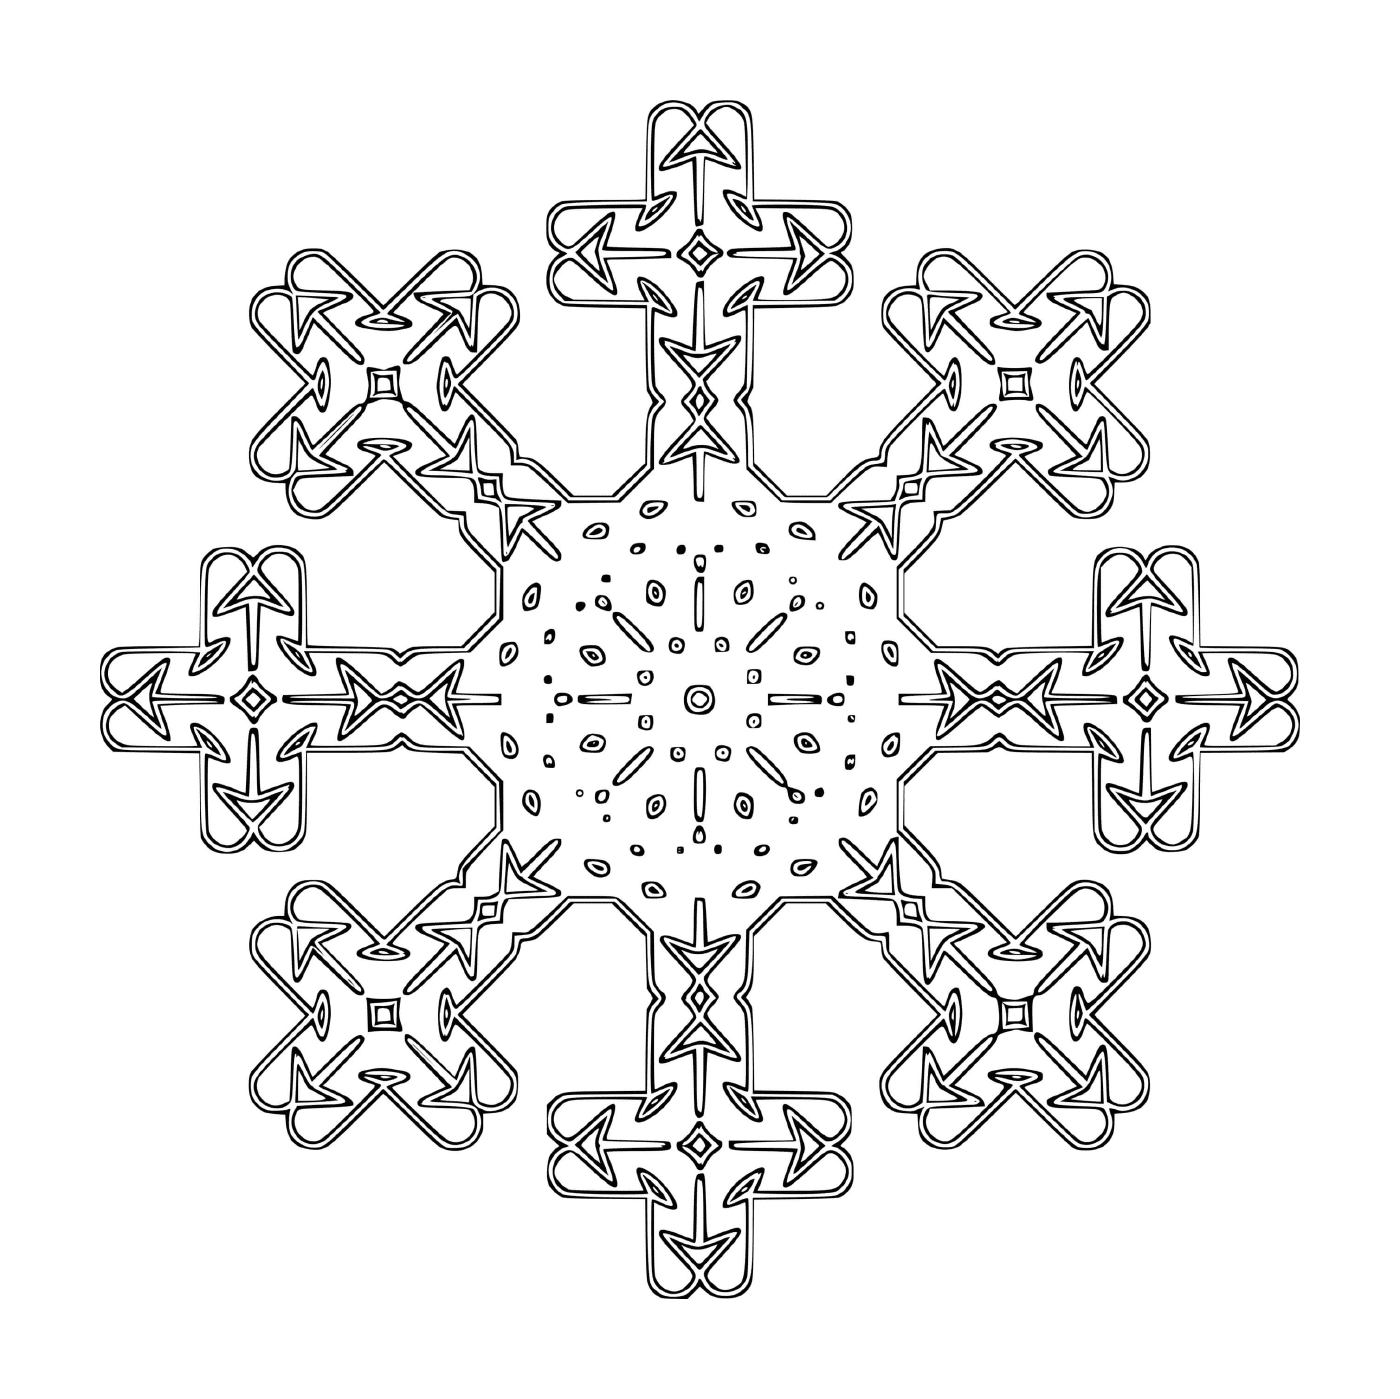  Un originale fiocco di neve a forma di croce 